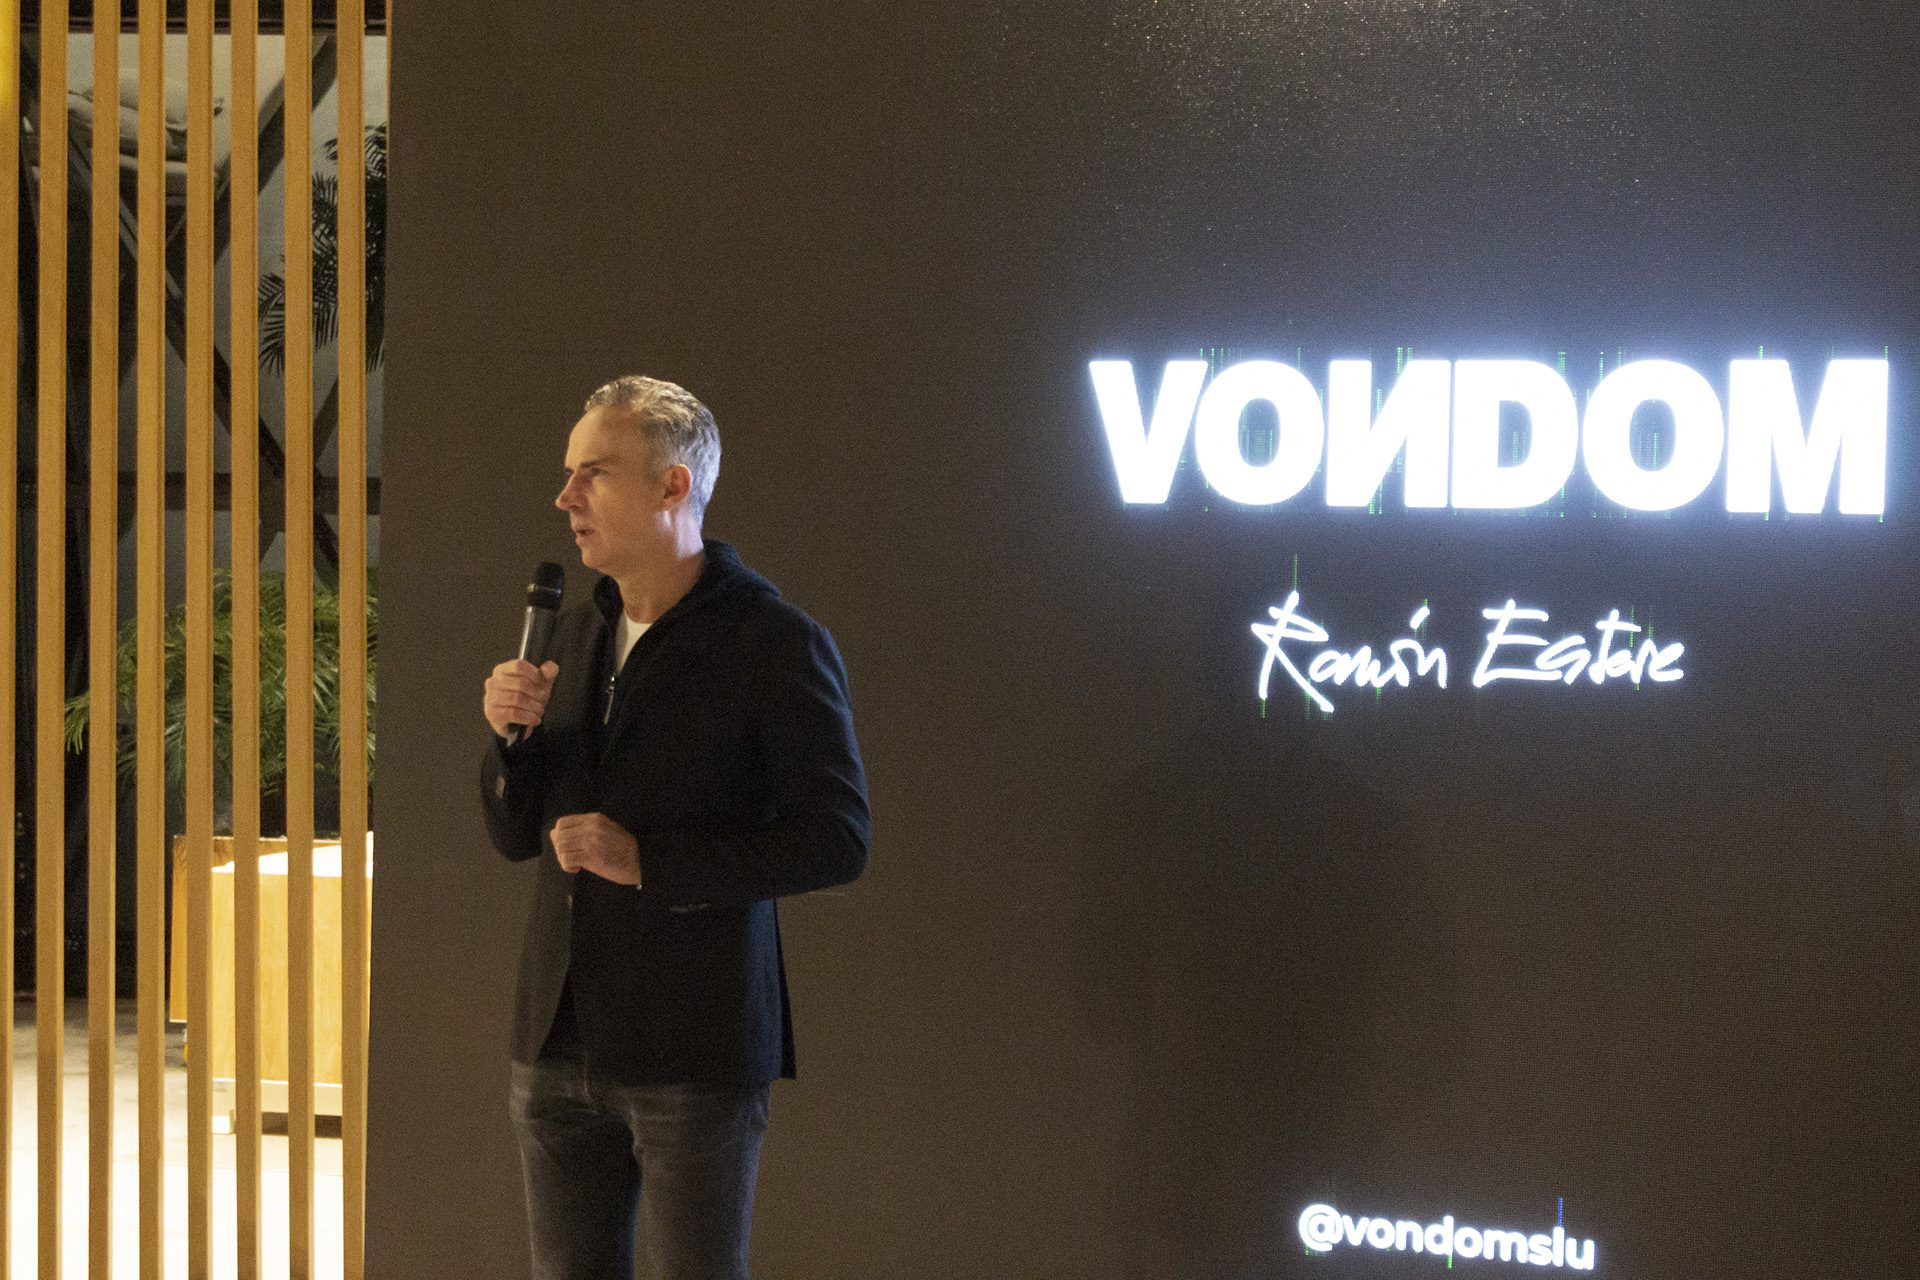 Vondom held its Design and Architecture event